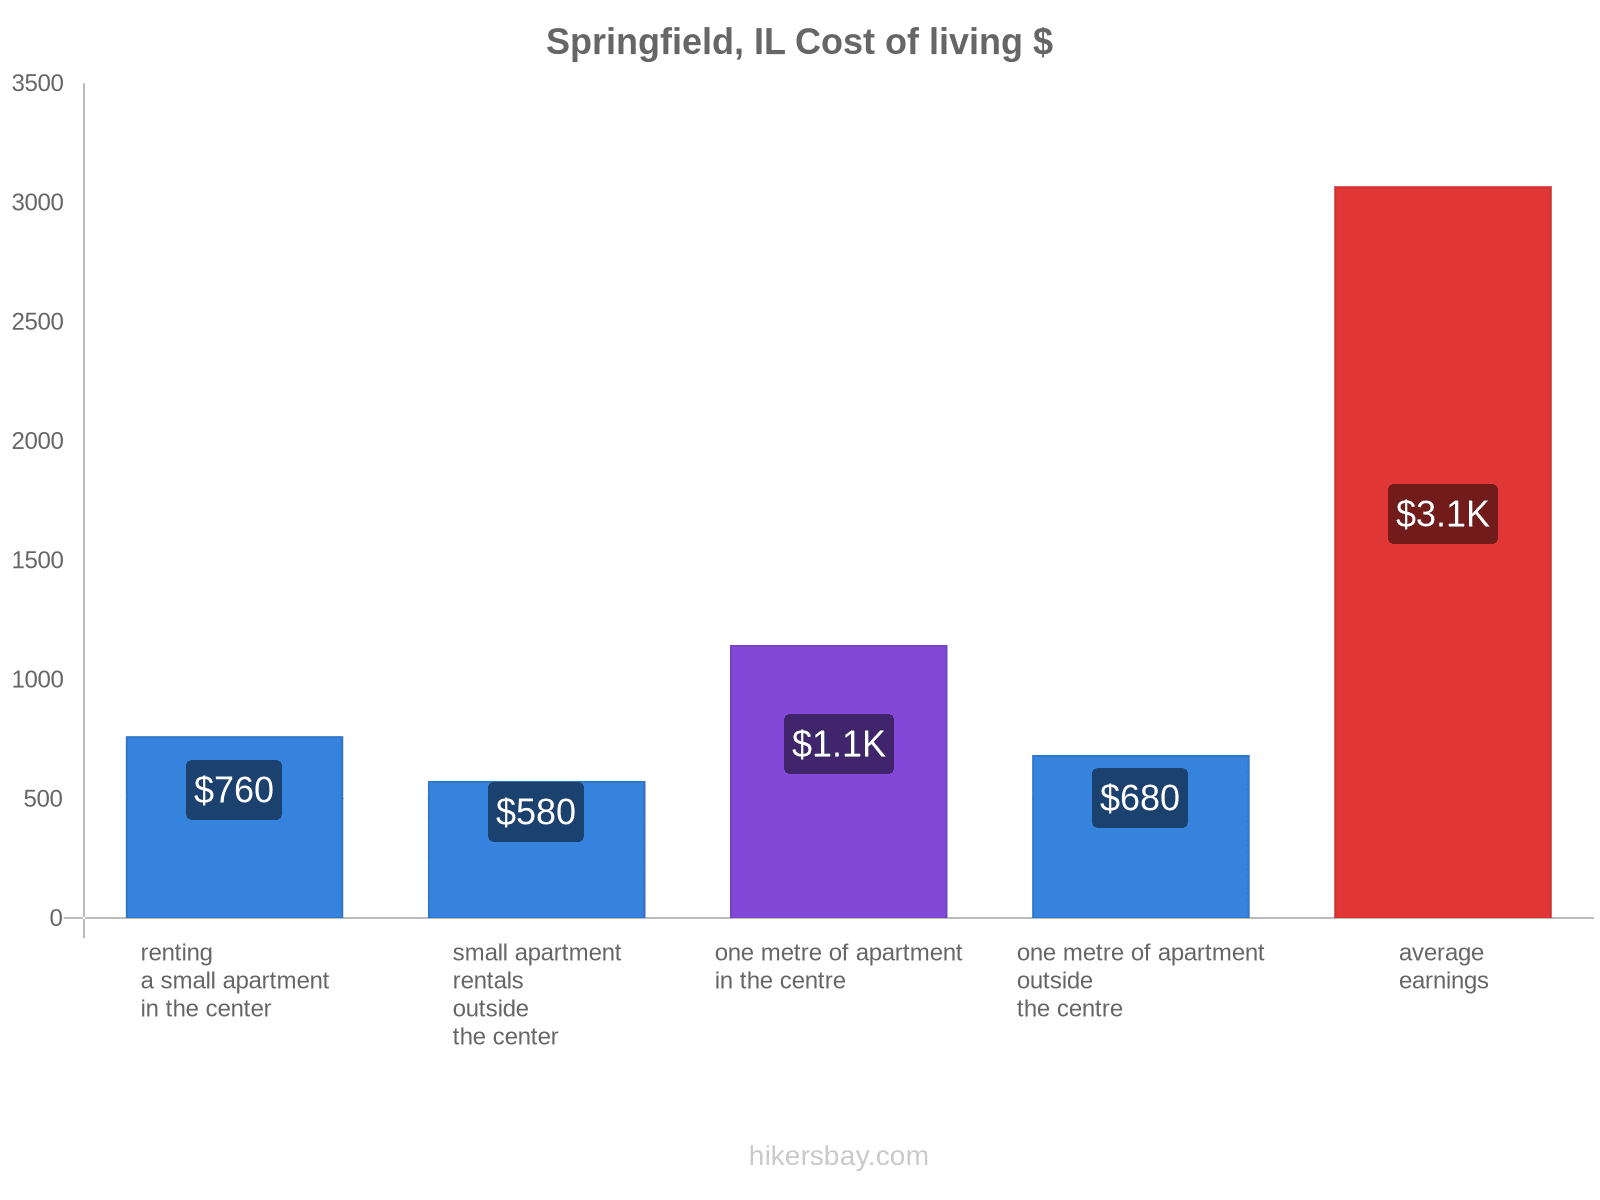 Springfield, IL cost of living hikersbay.com